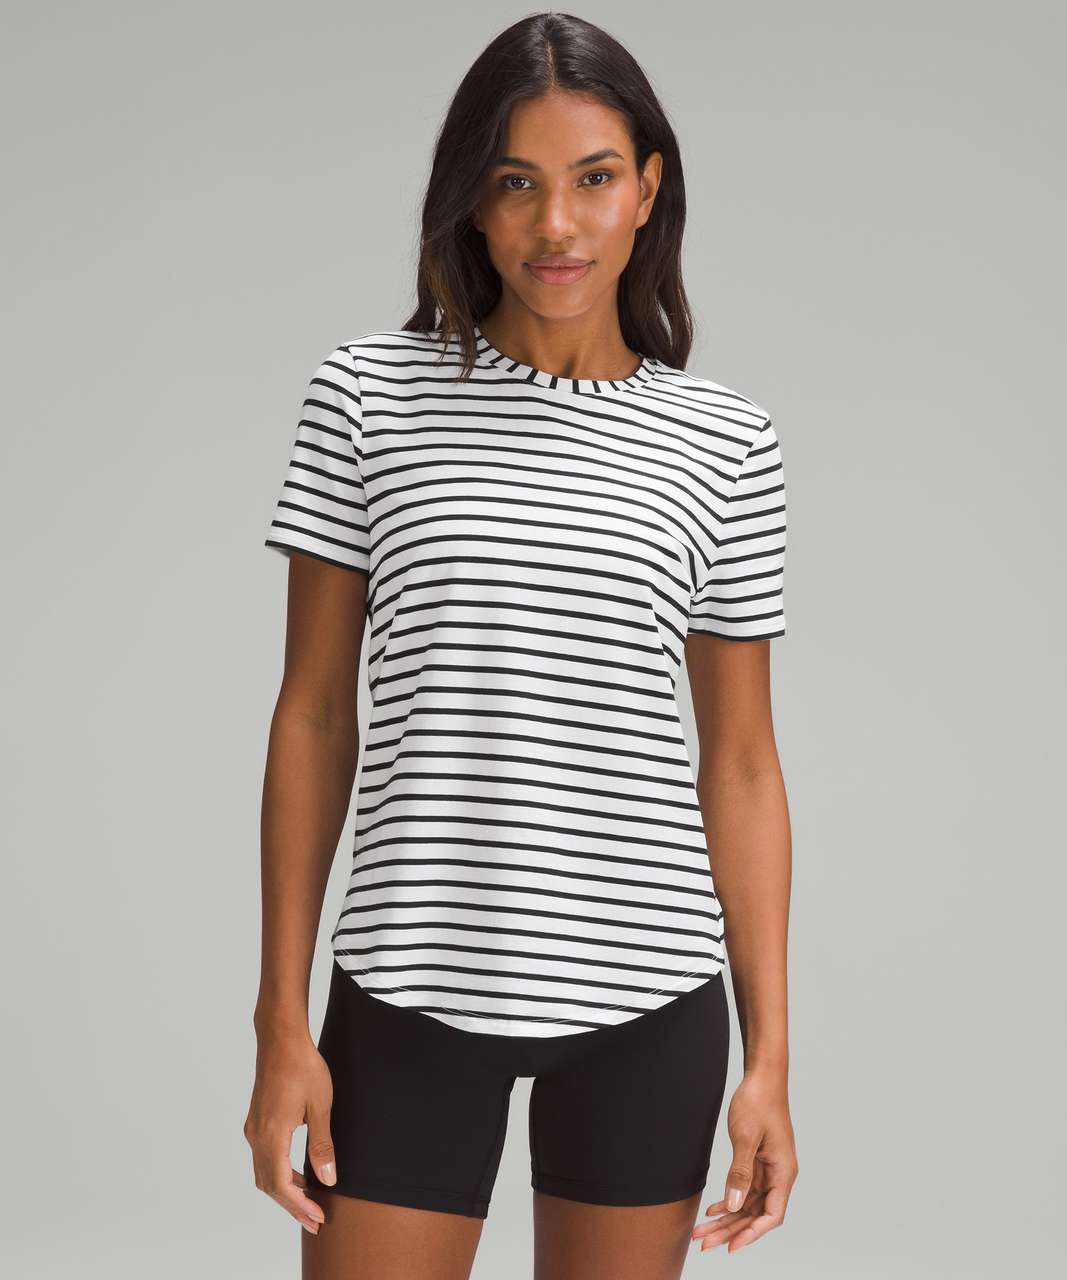 Lululemon Love Crewneck T-Shirt - Yachtie Stripe White Black